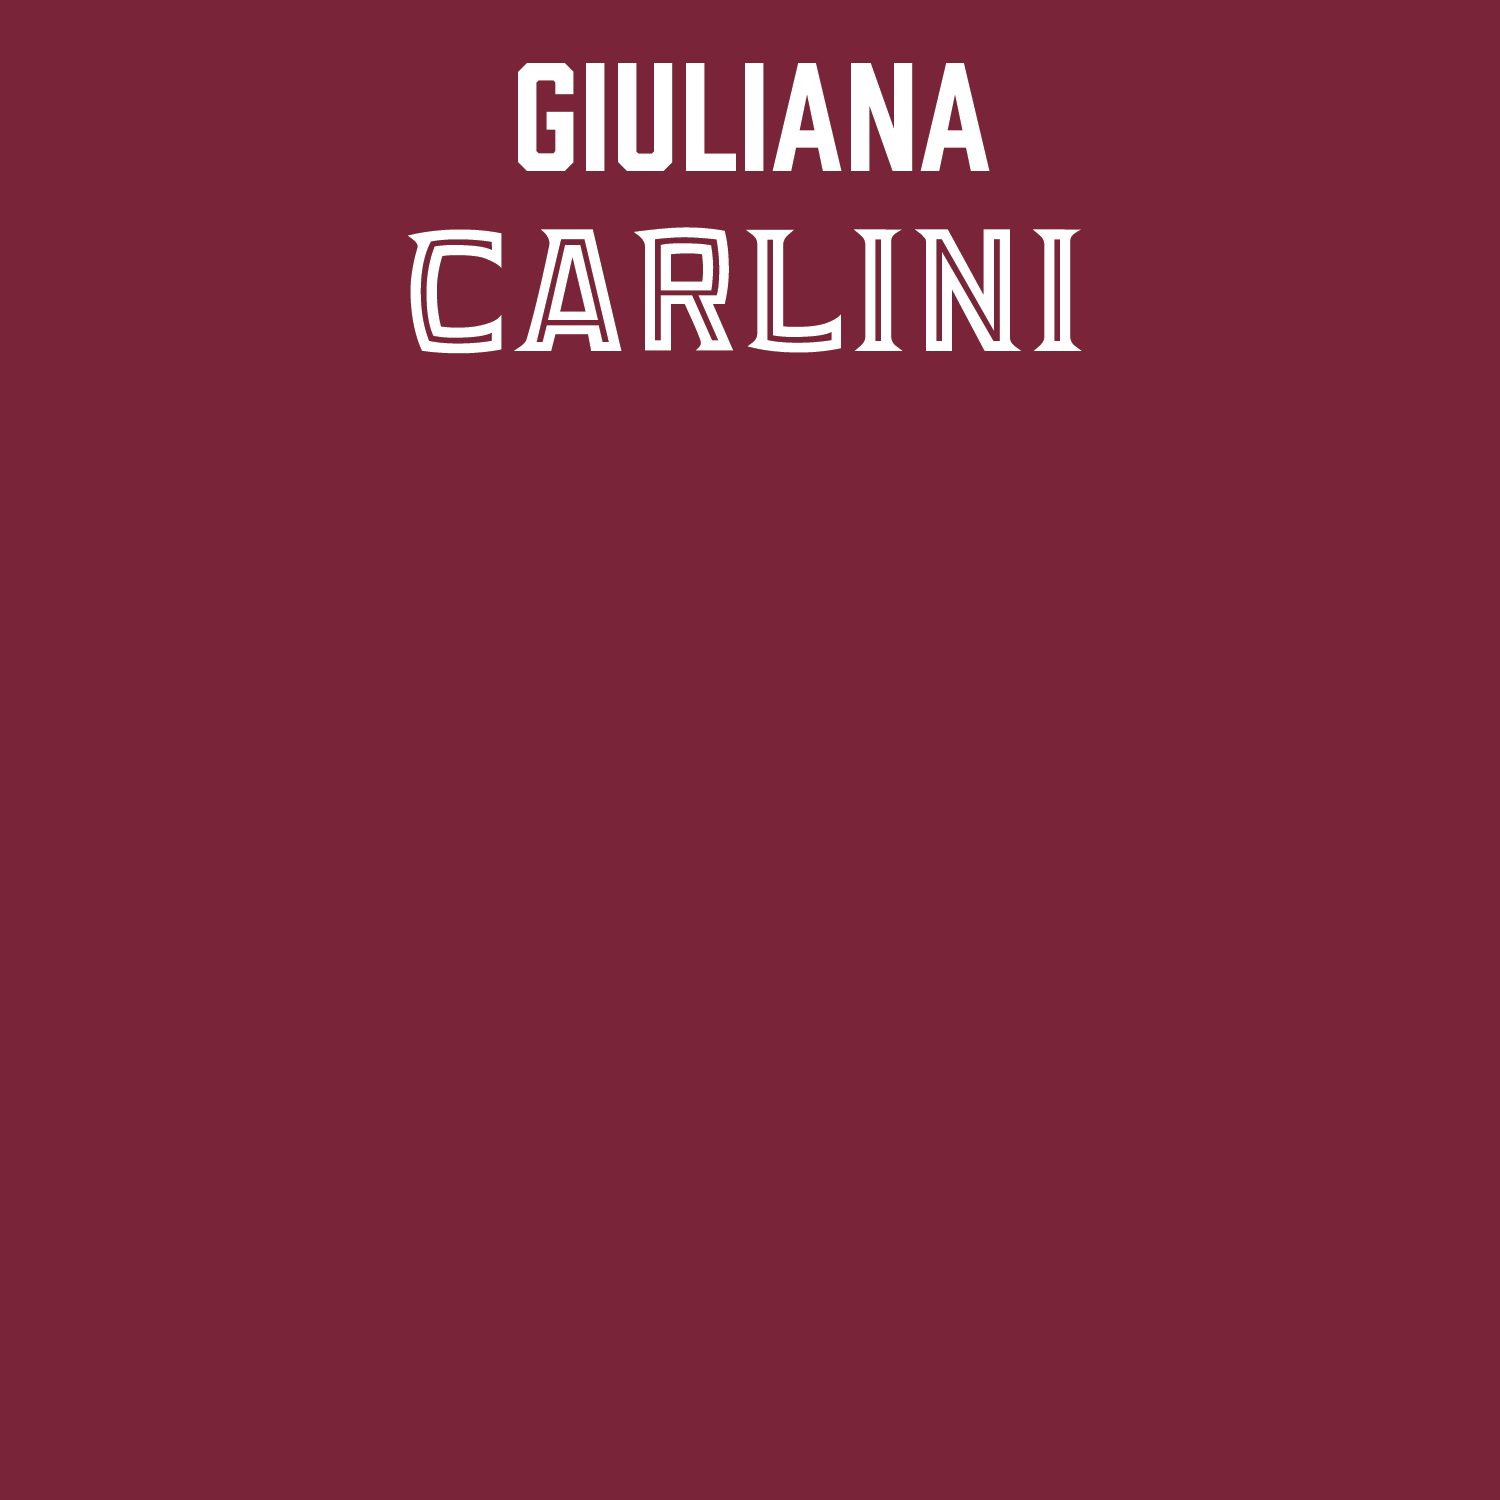 Giuliana Carlini